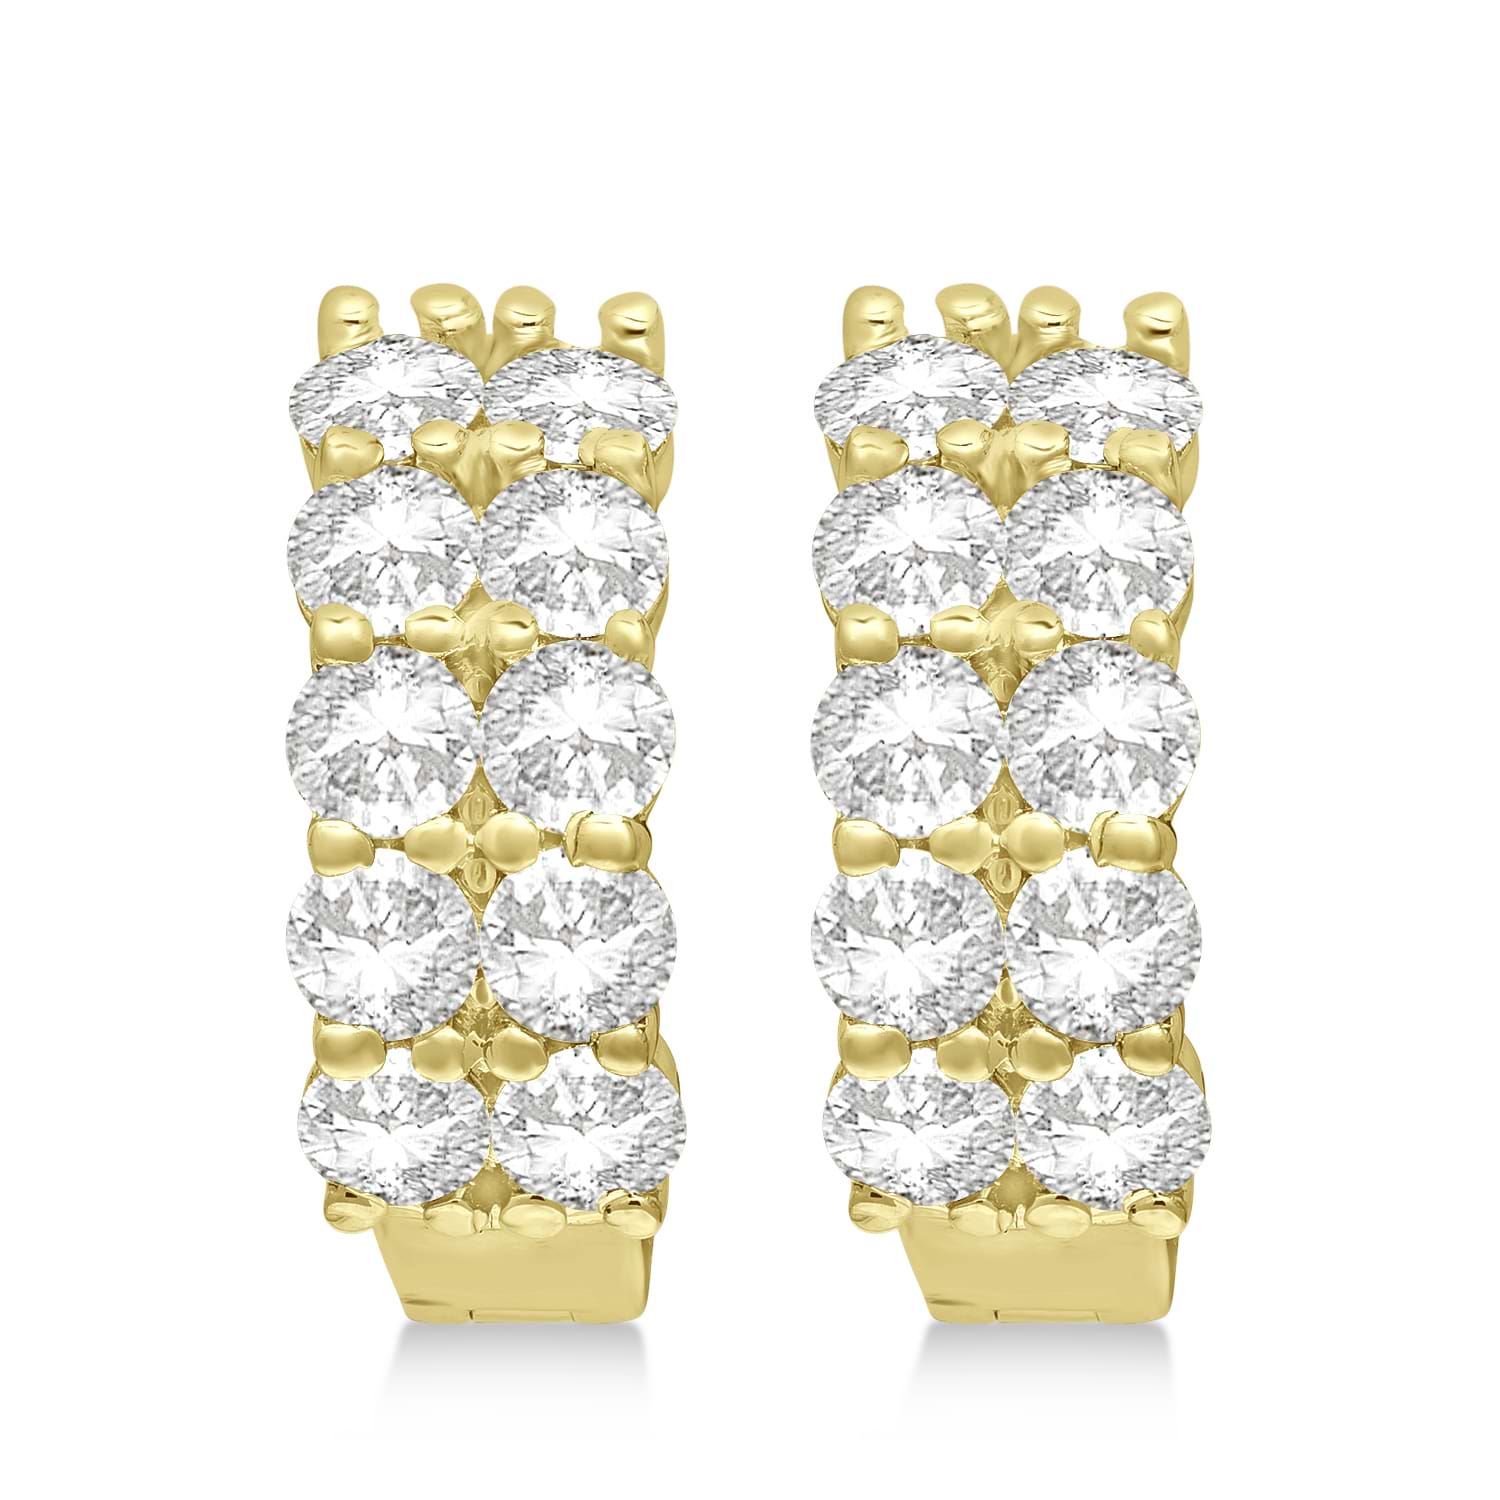 Double Row Diamond Huggie Earrings 14k Yellow Gold (3.08ct)